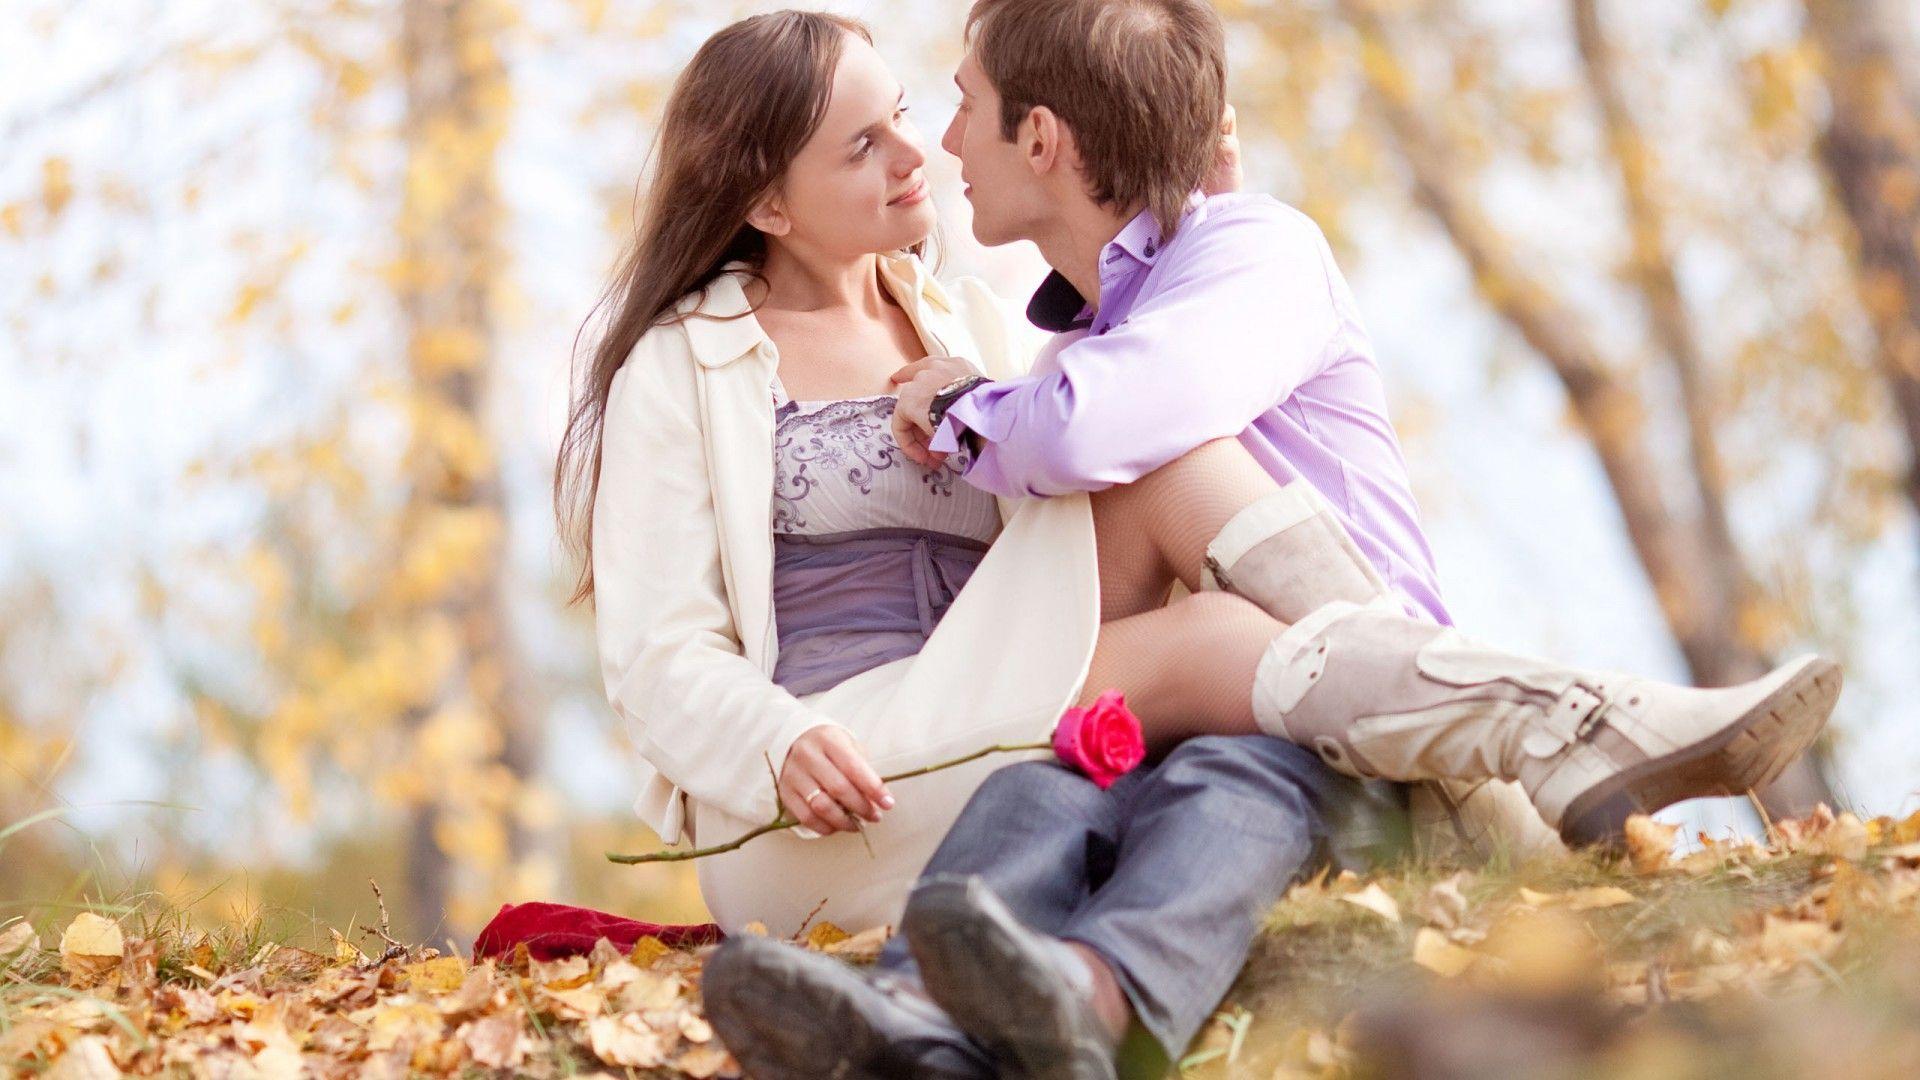 Cute Romantic Love kiss Image. PixLos. Kiss image